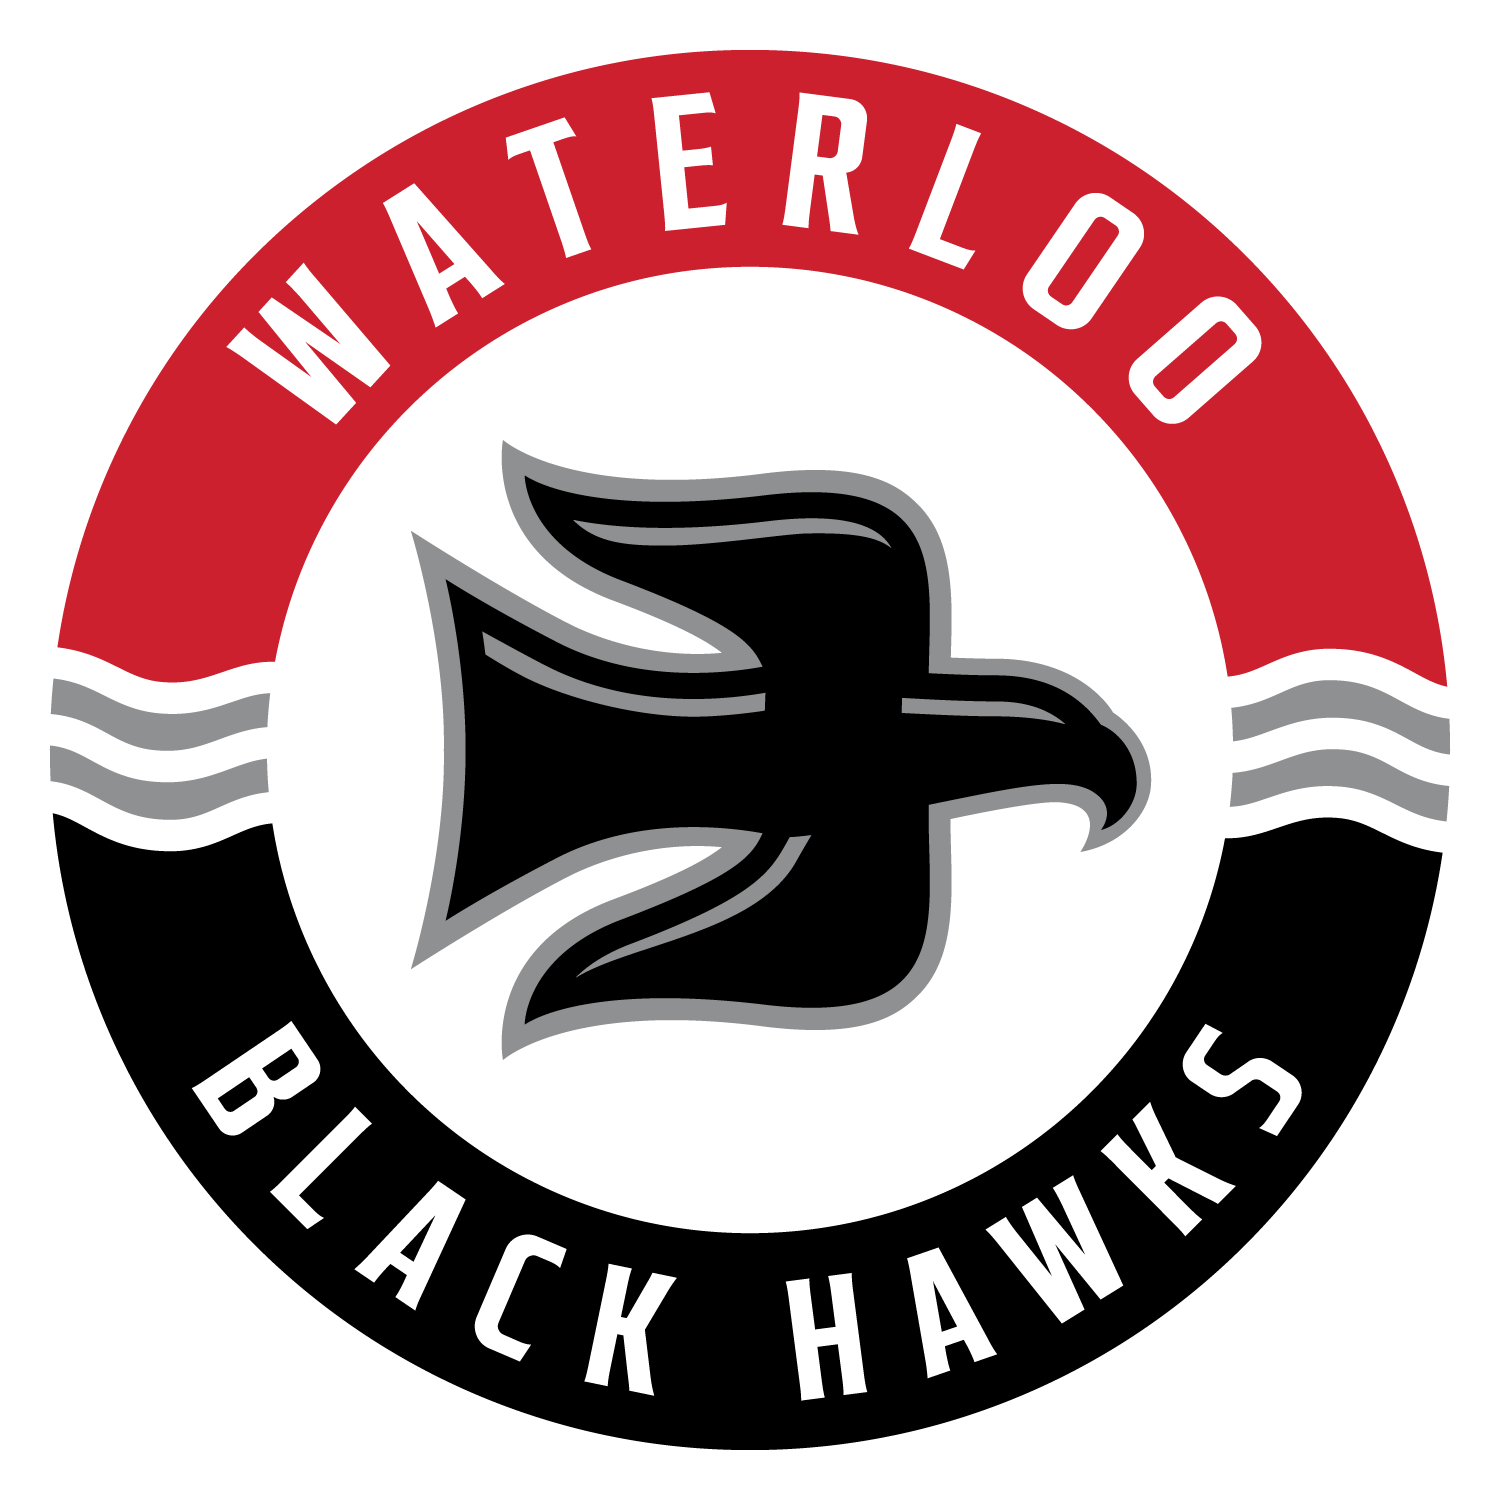 Waterloo Black Hawks Ticket Portal